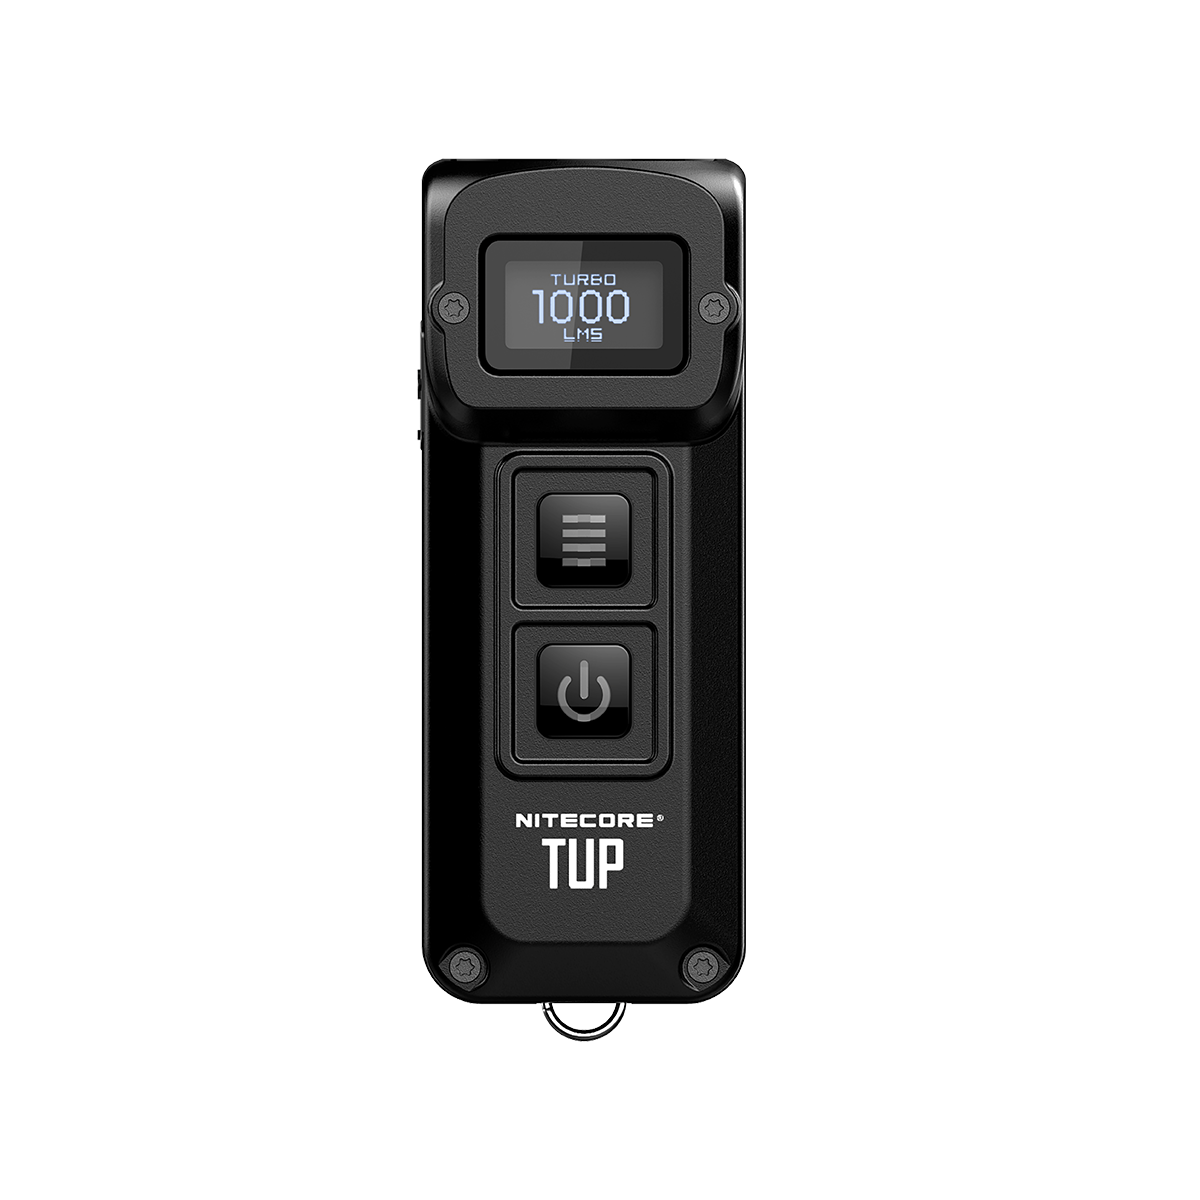 NITECORE TUP CREE XP-L HD V6 1000LM Revolutionary Pocket Light